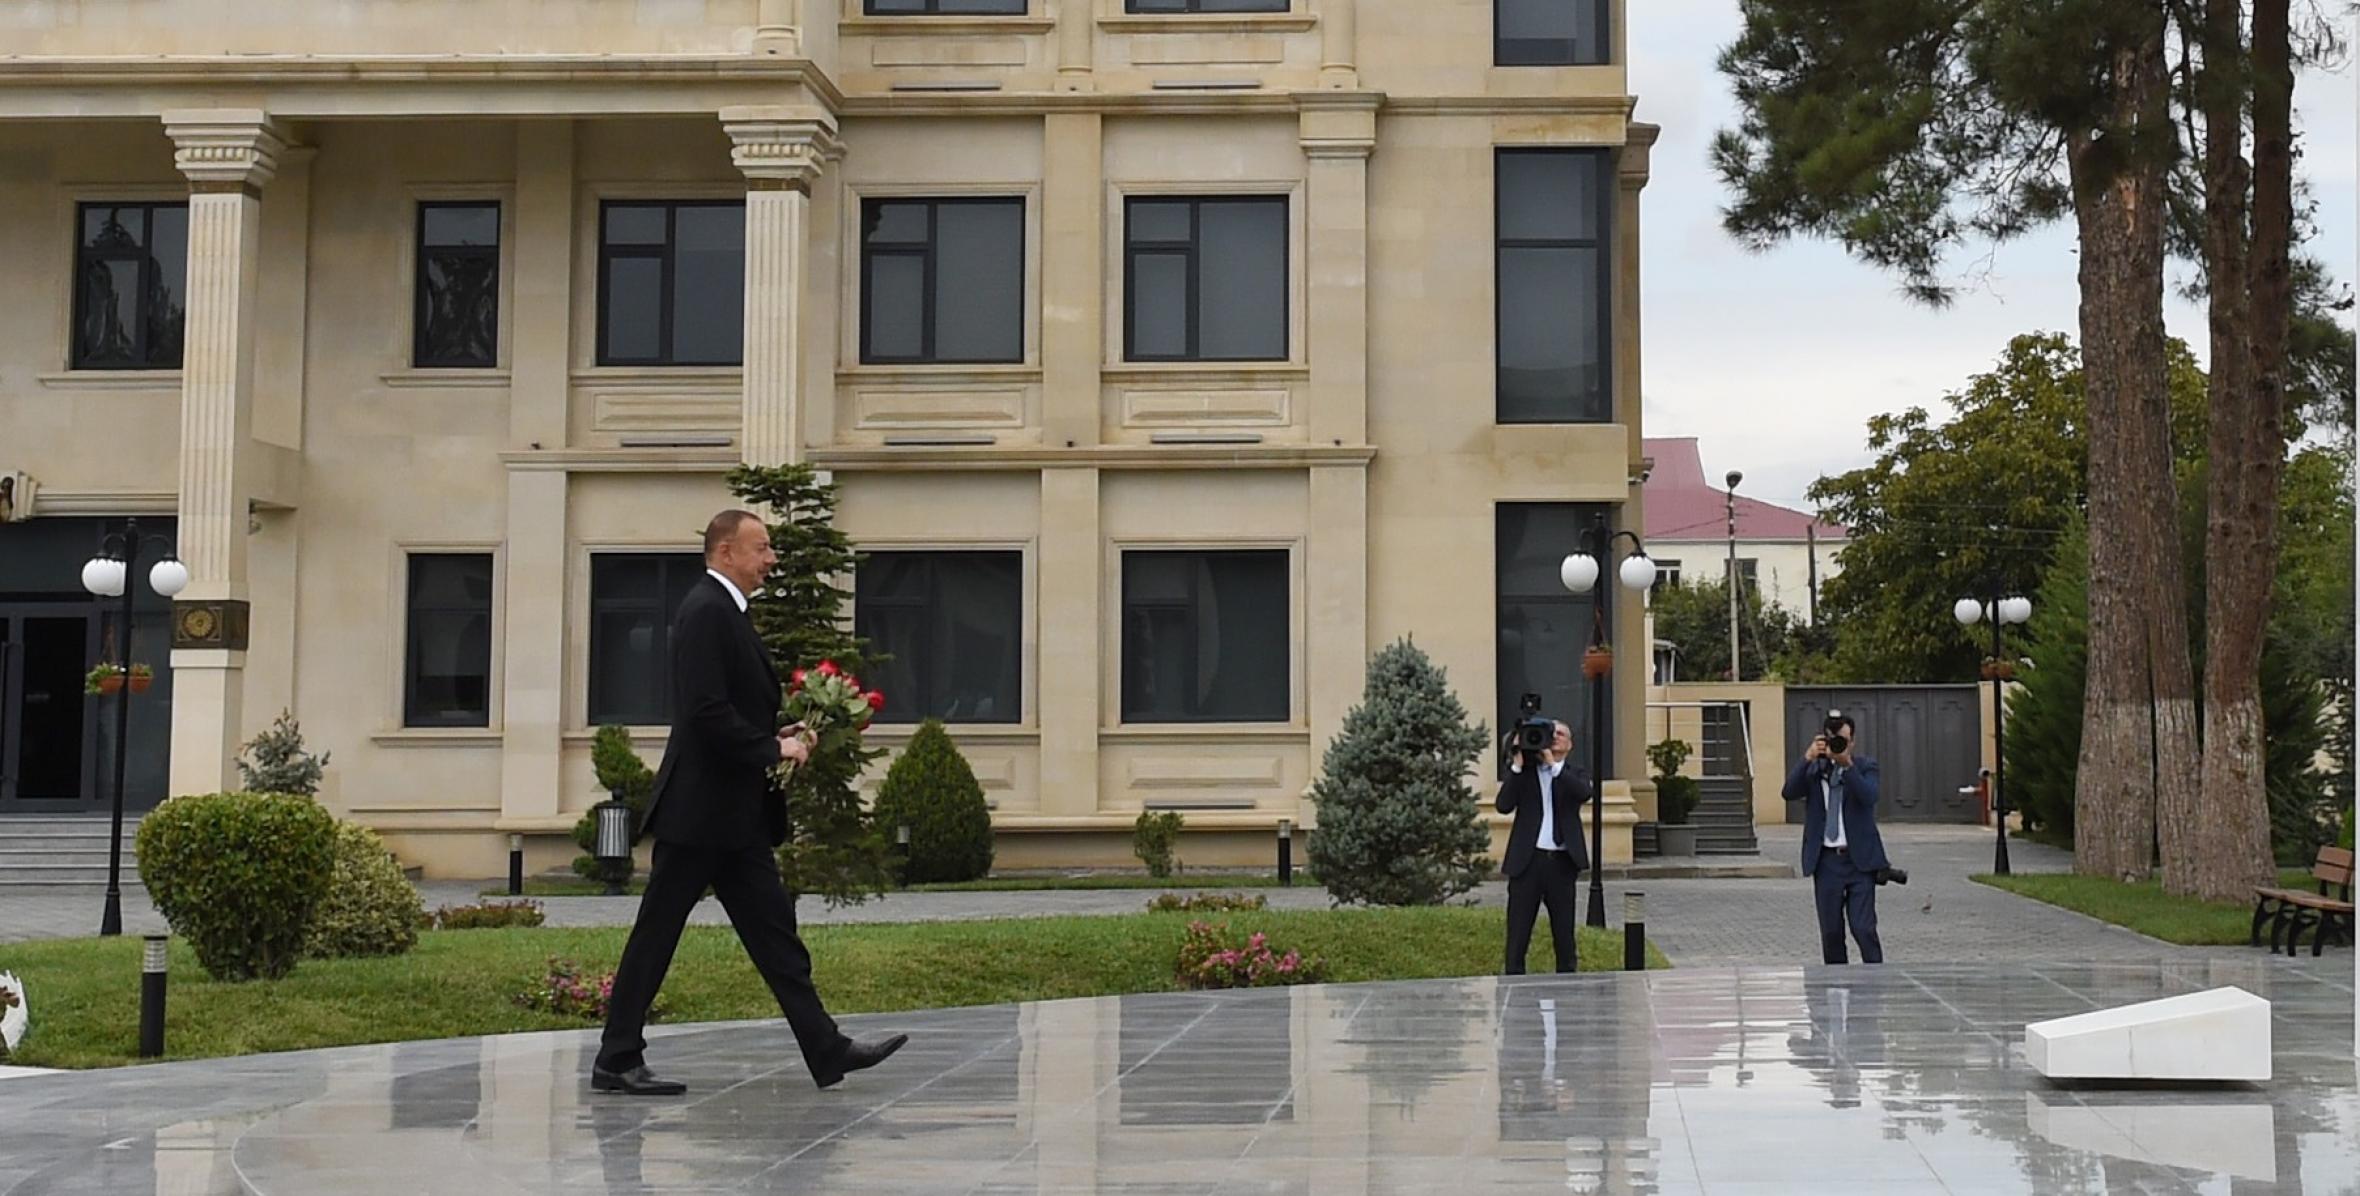 Ilham Aliyev arrived in Bilasuvar district for a visit